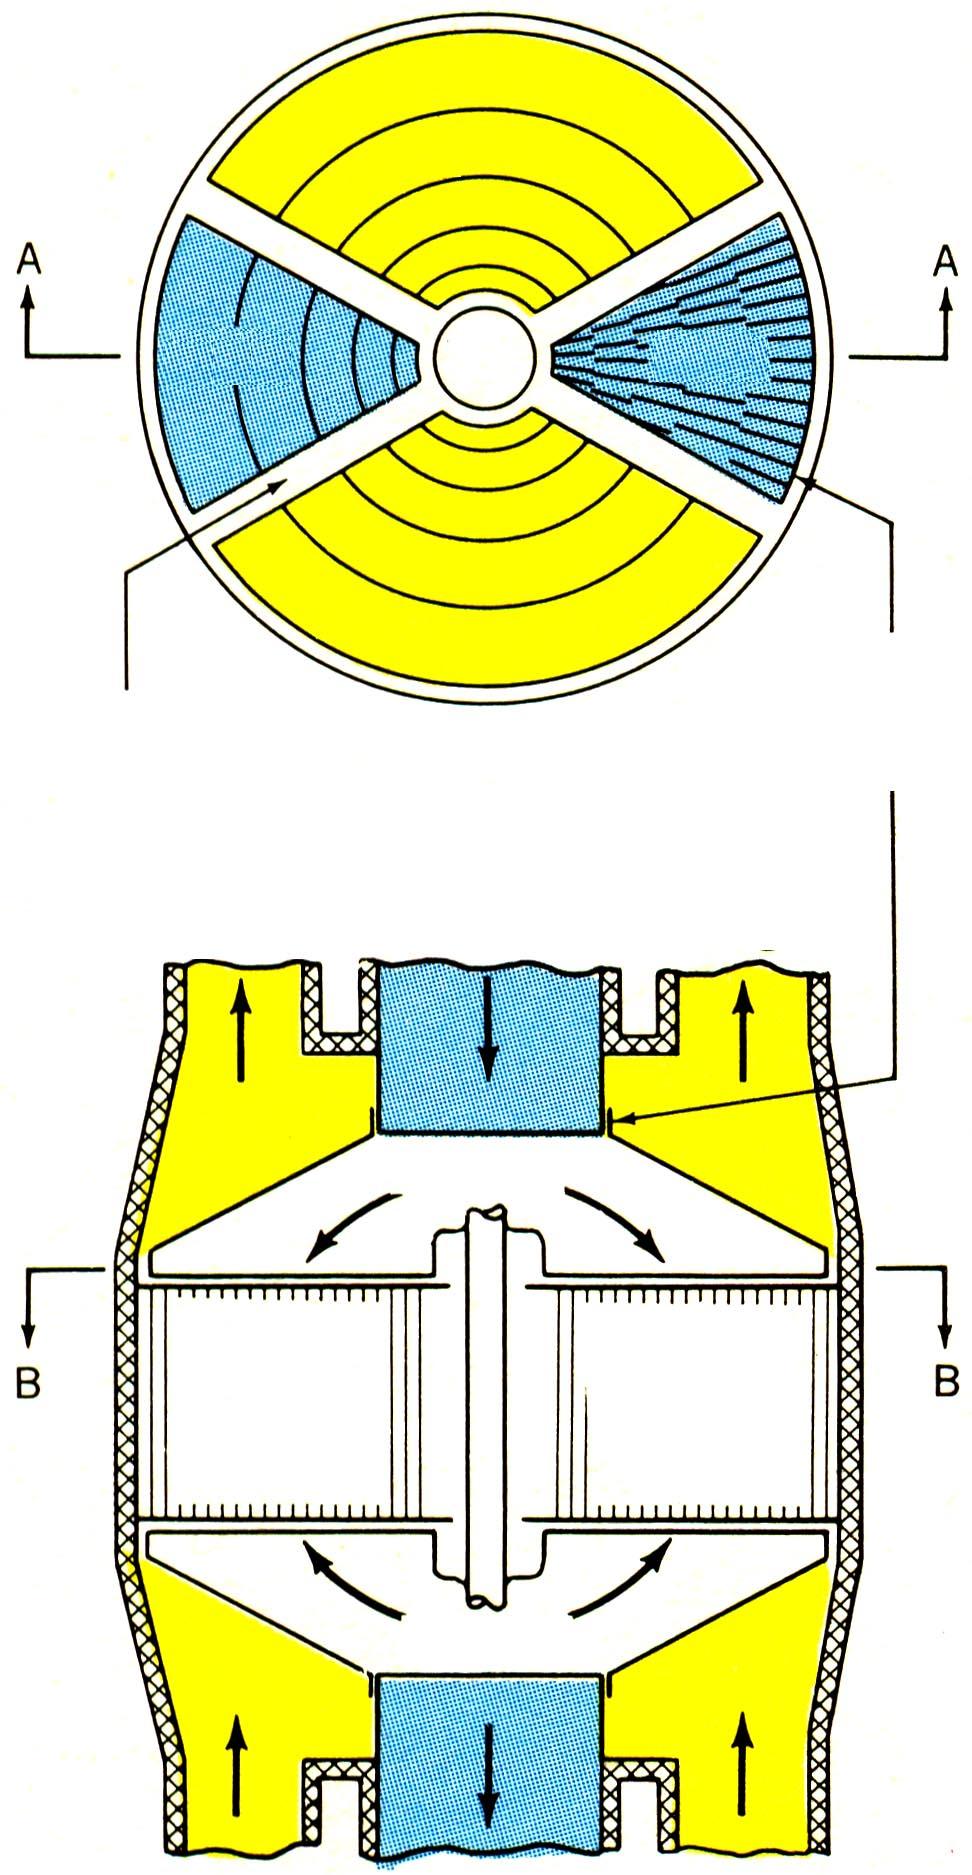 Dijelovi generatora pare 16-6 Plin Zrak Zrak Presjek B - B Plin Radijalna brtva Brtva po obodu Izlaz plina Ulaz zraka Izlaz plina Rotor Grupe fiksnih ploča Grupe fiksnih ploča Rotor Presjek A - A